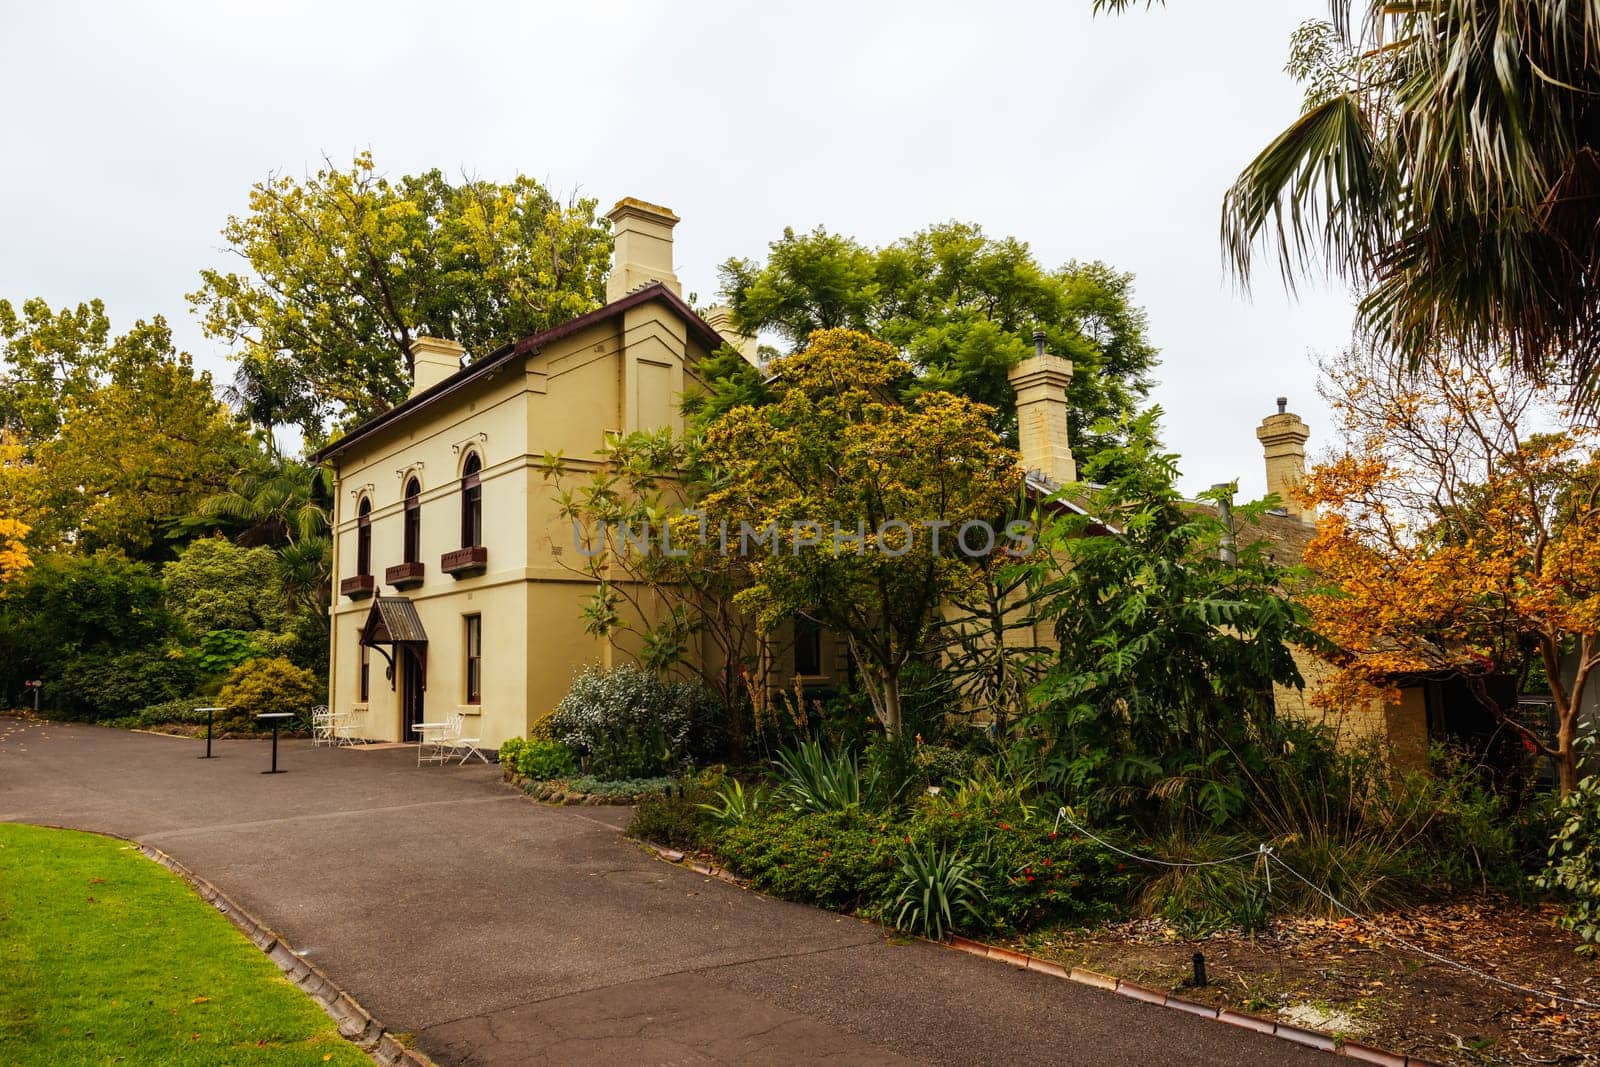 Gardens House at Royal Botanic Gardens Victoria on a cool autumn morning in Melbourne, Victoria, Australia